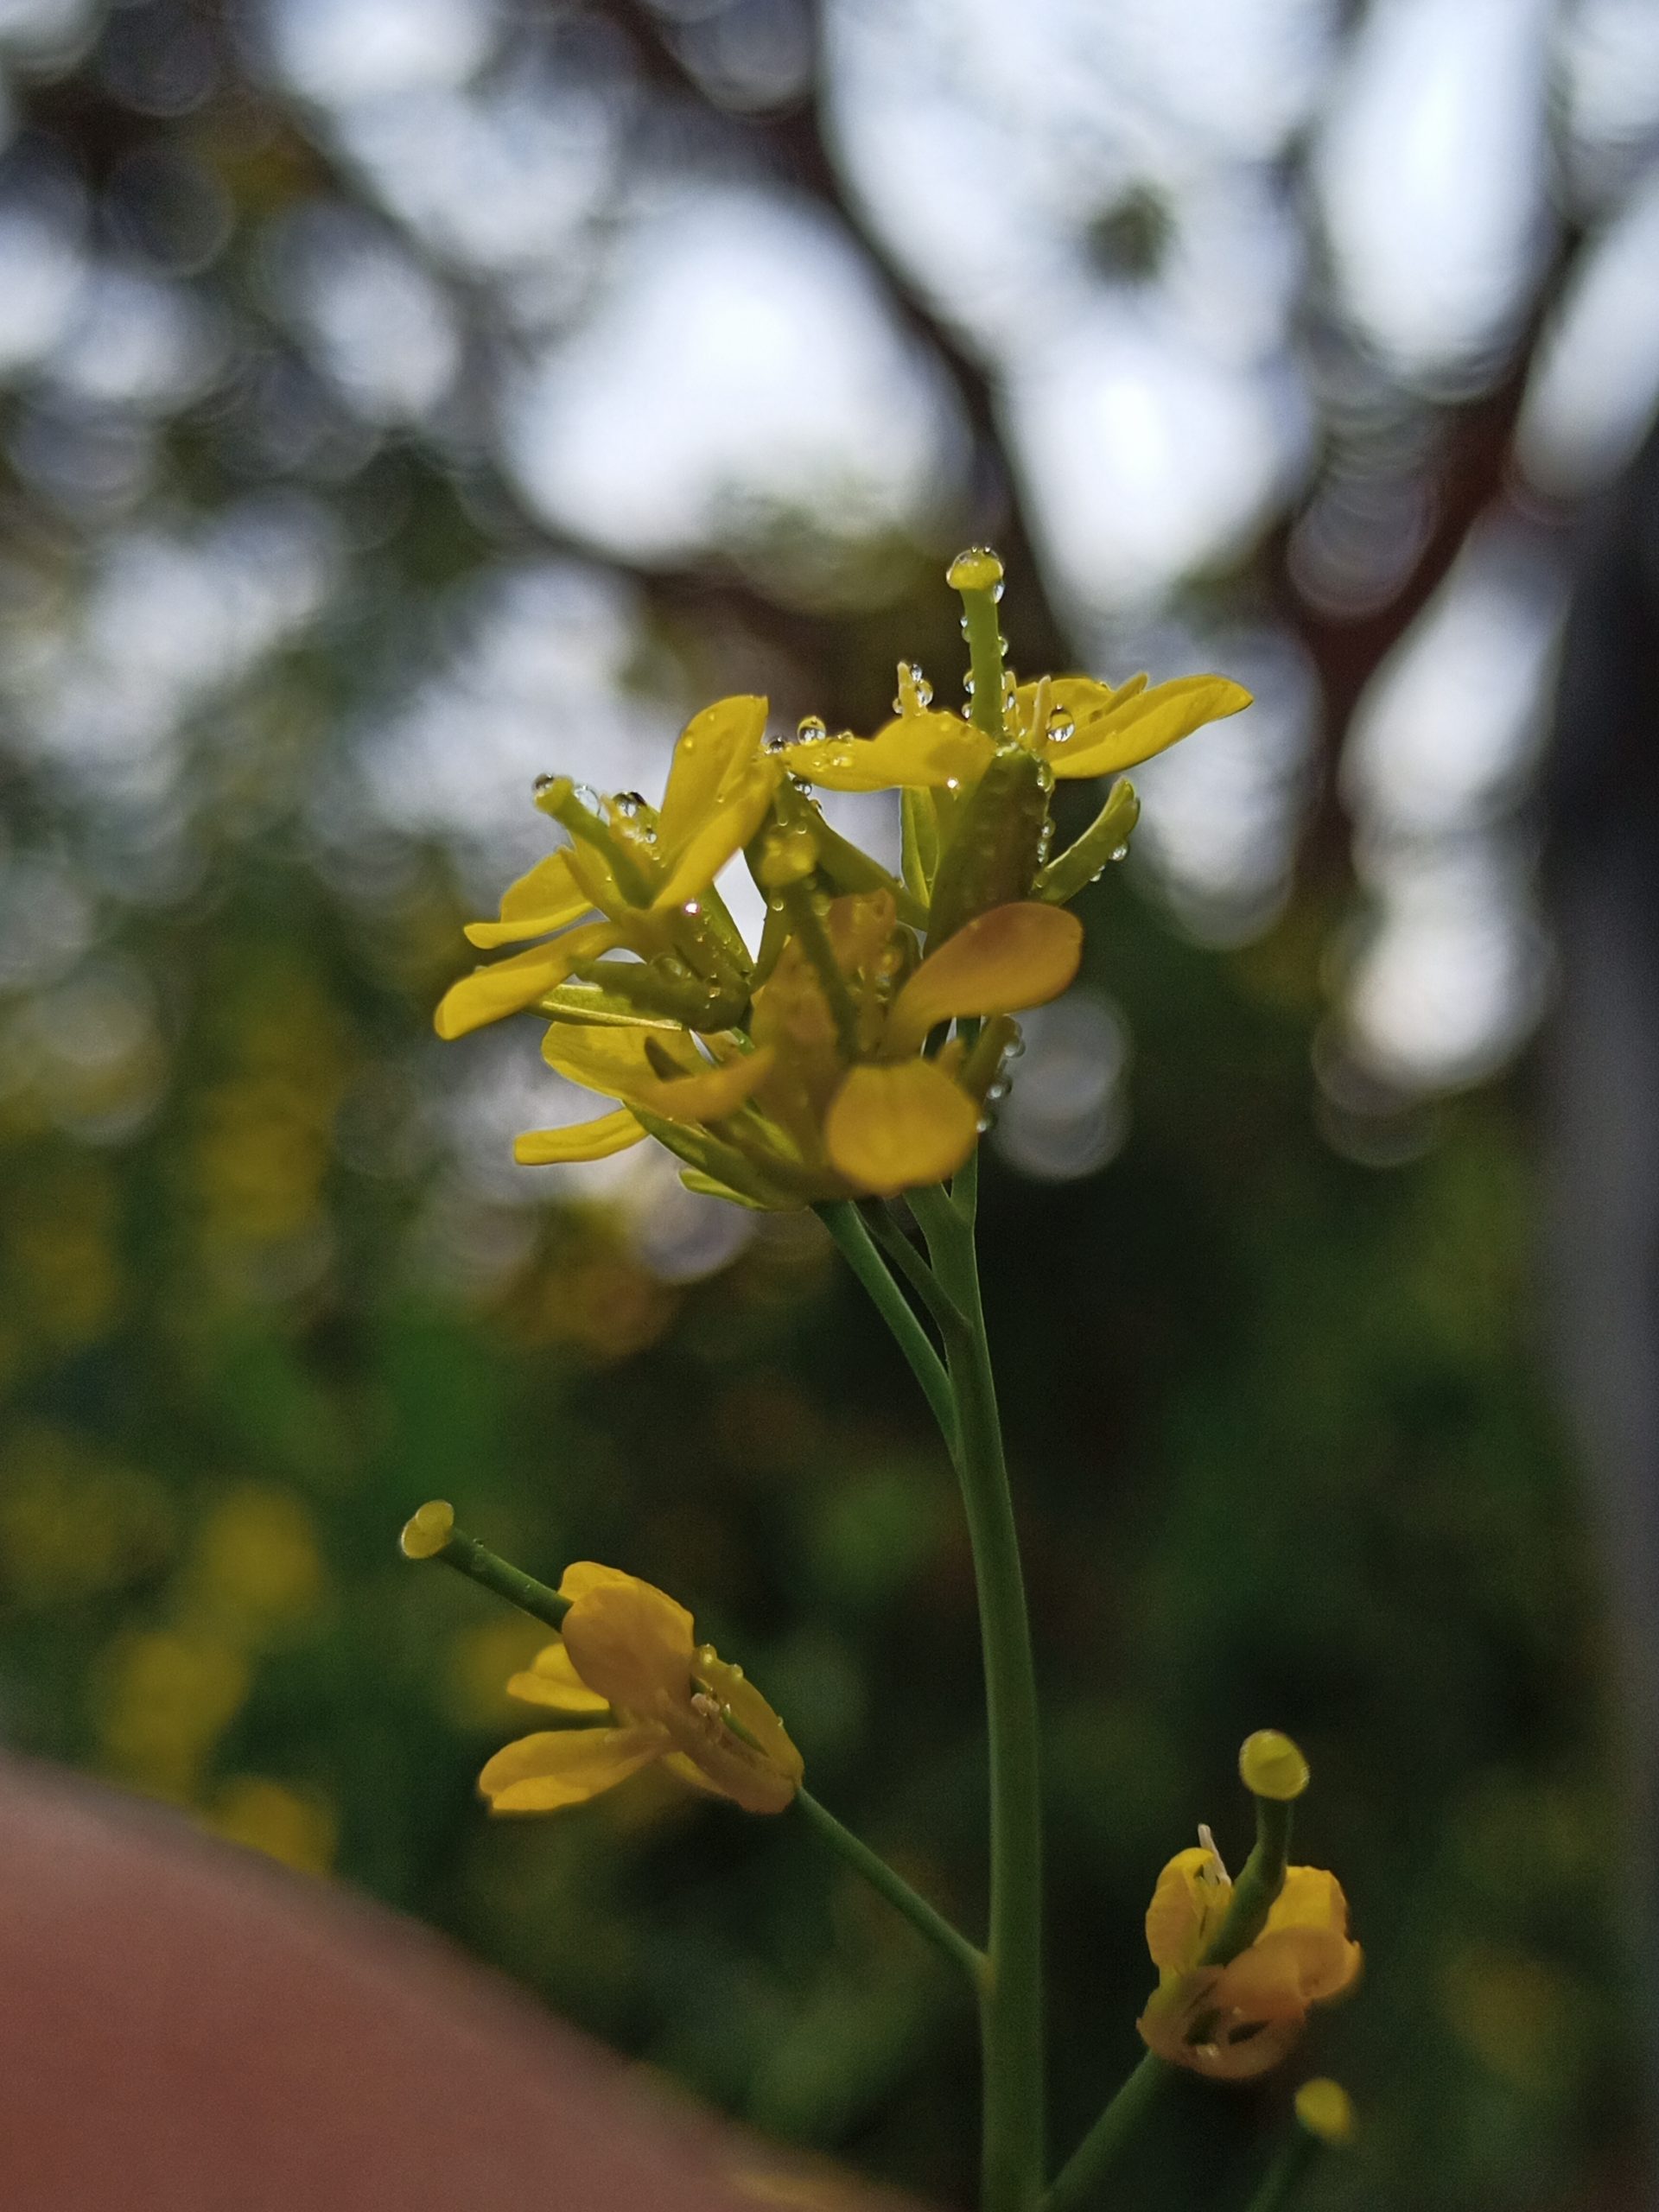 Mustard plant flower